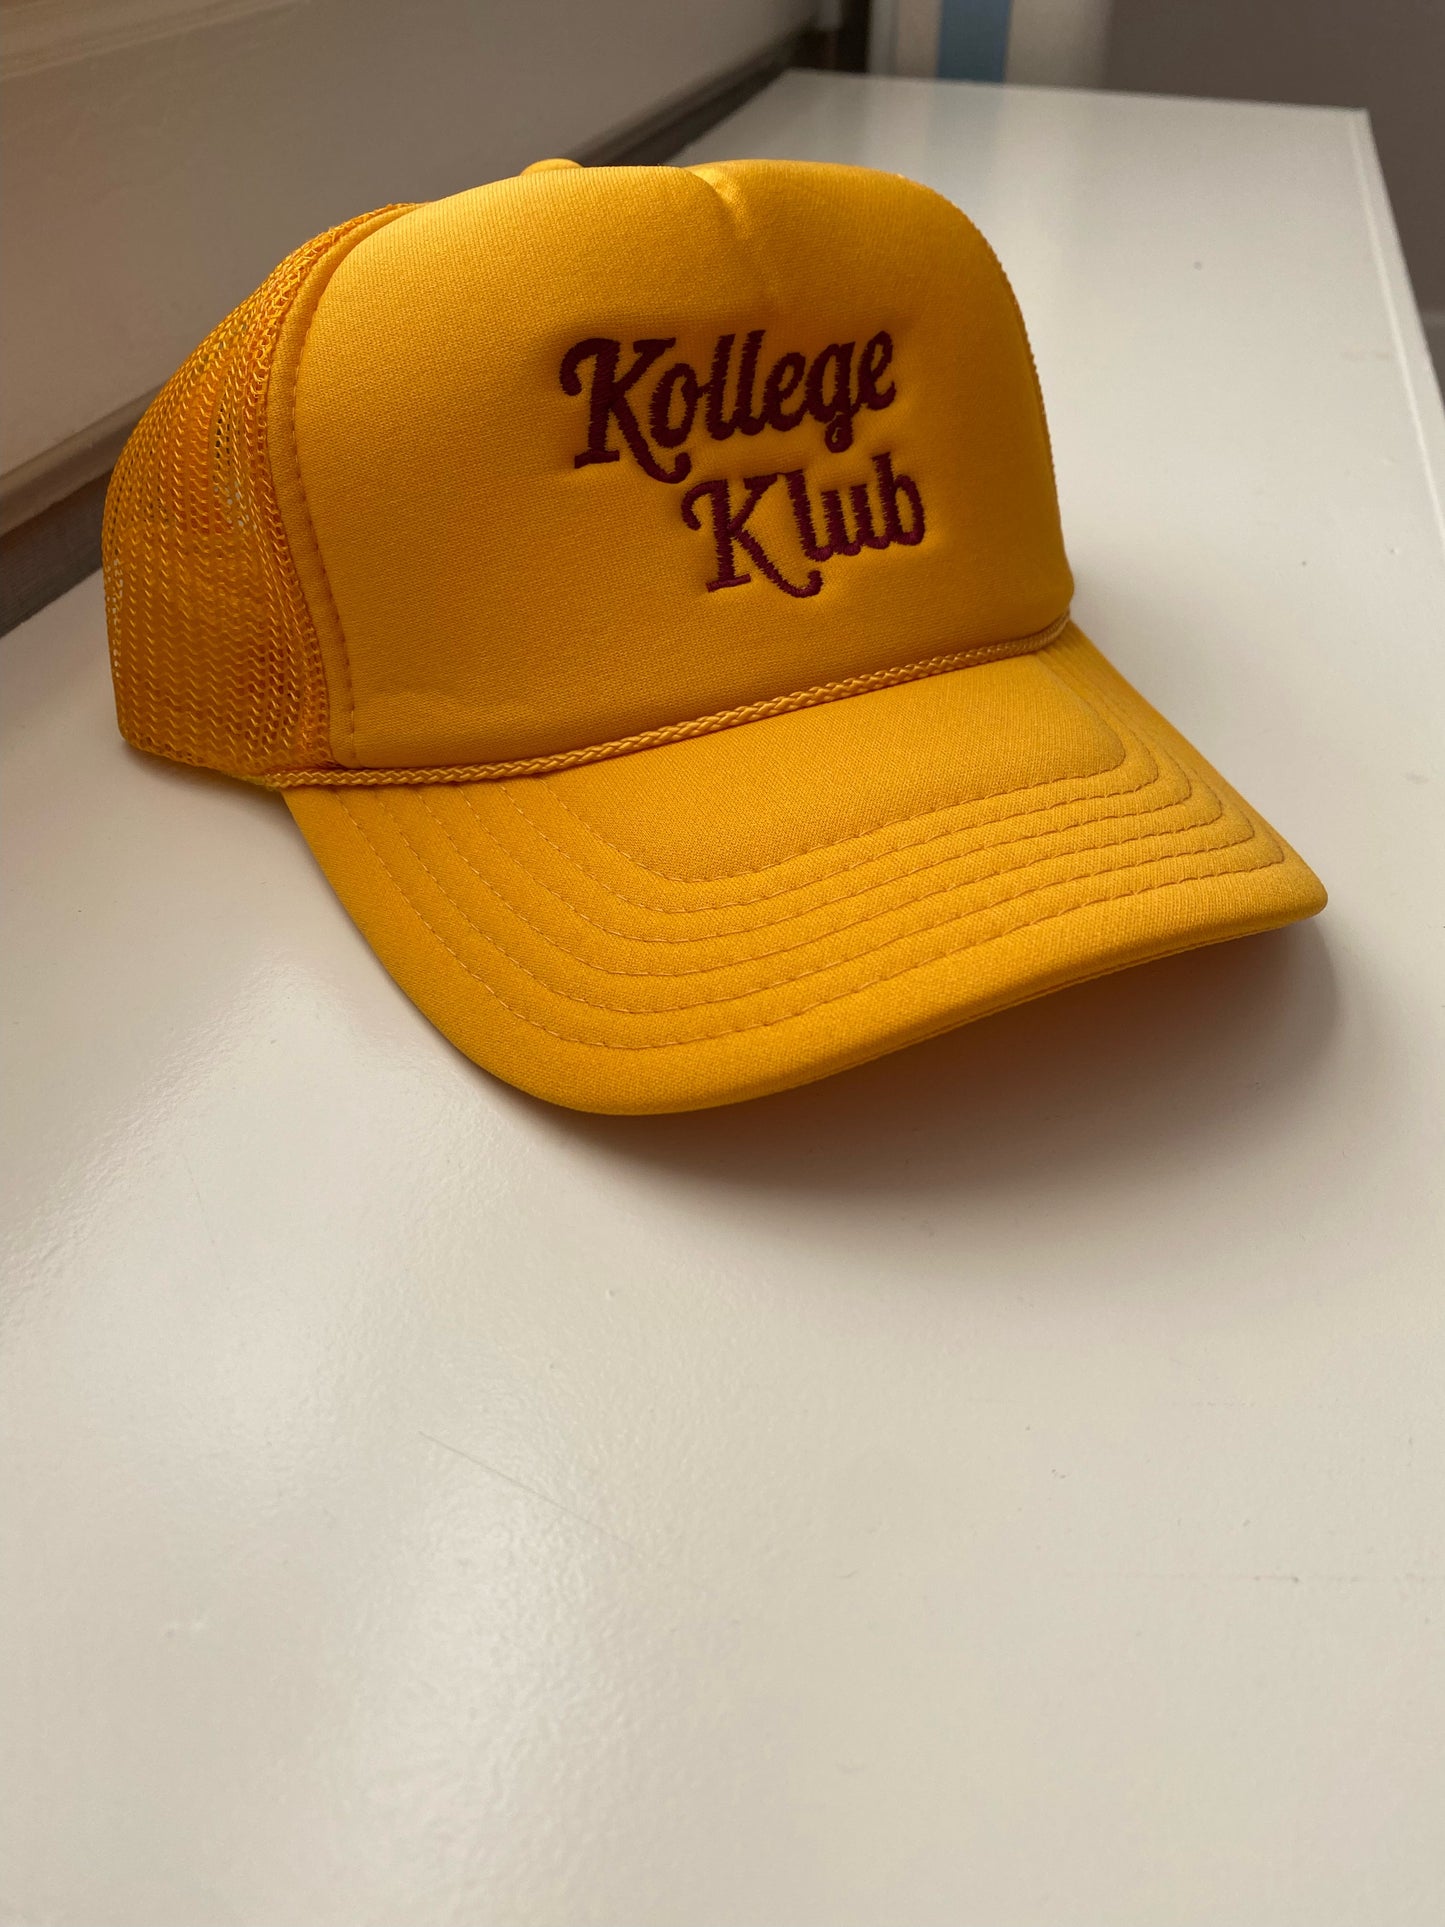 Kollege Klub Trucker Hat